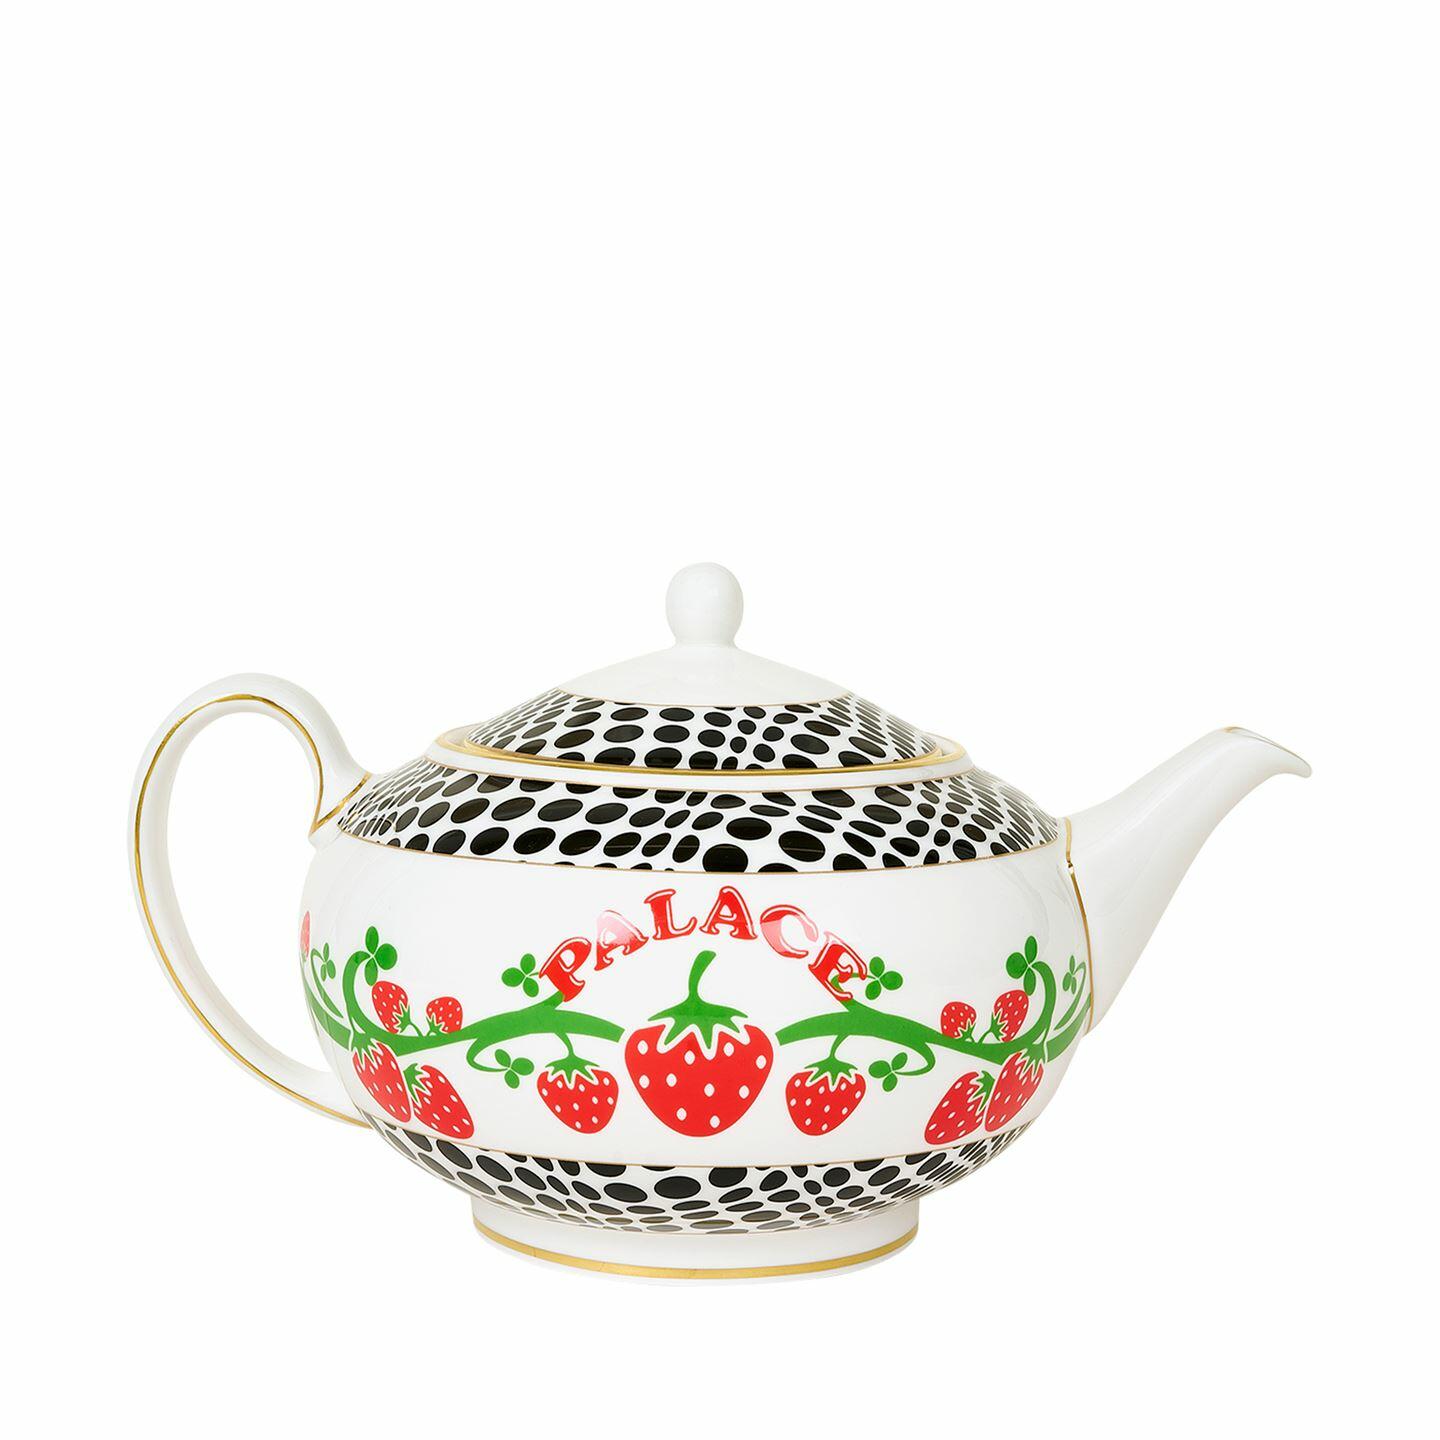 Palace Wedgwood Teapot